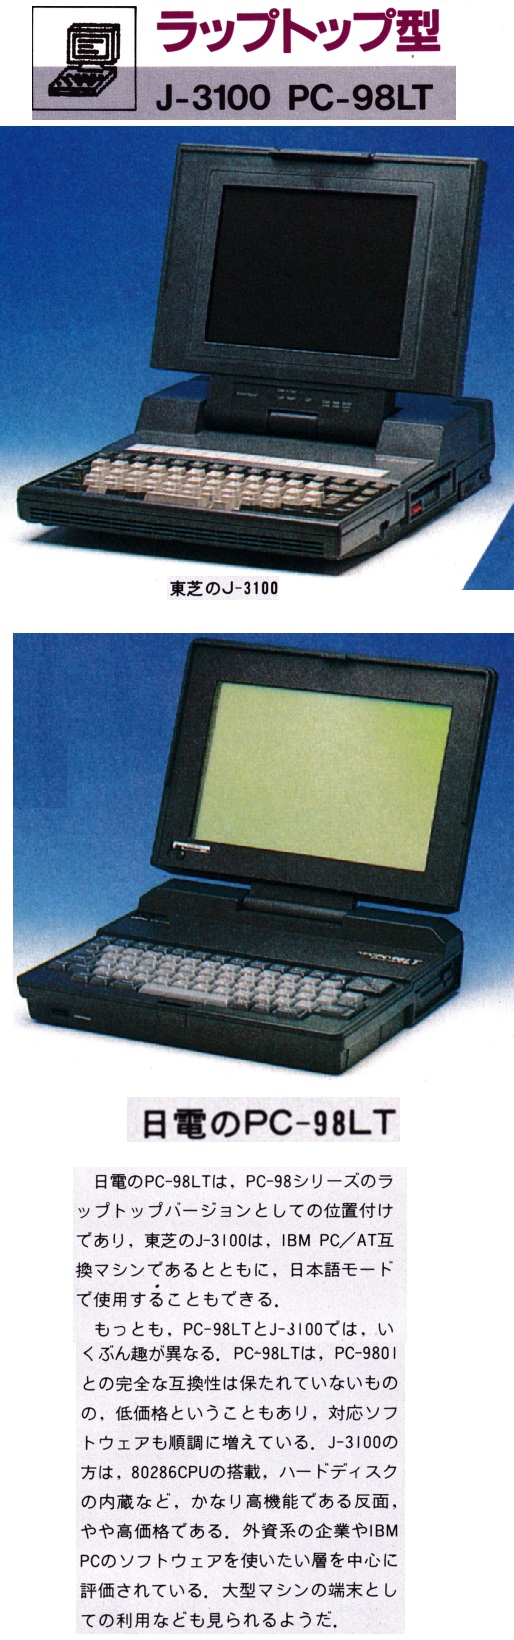 ASCII1987(08)c14次世代デスクトップ_ラップトップ型_W514.jpg